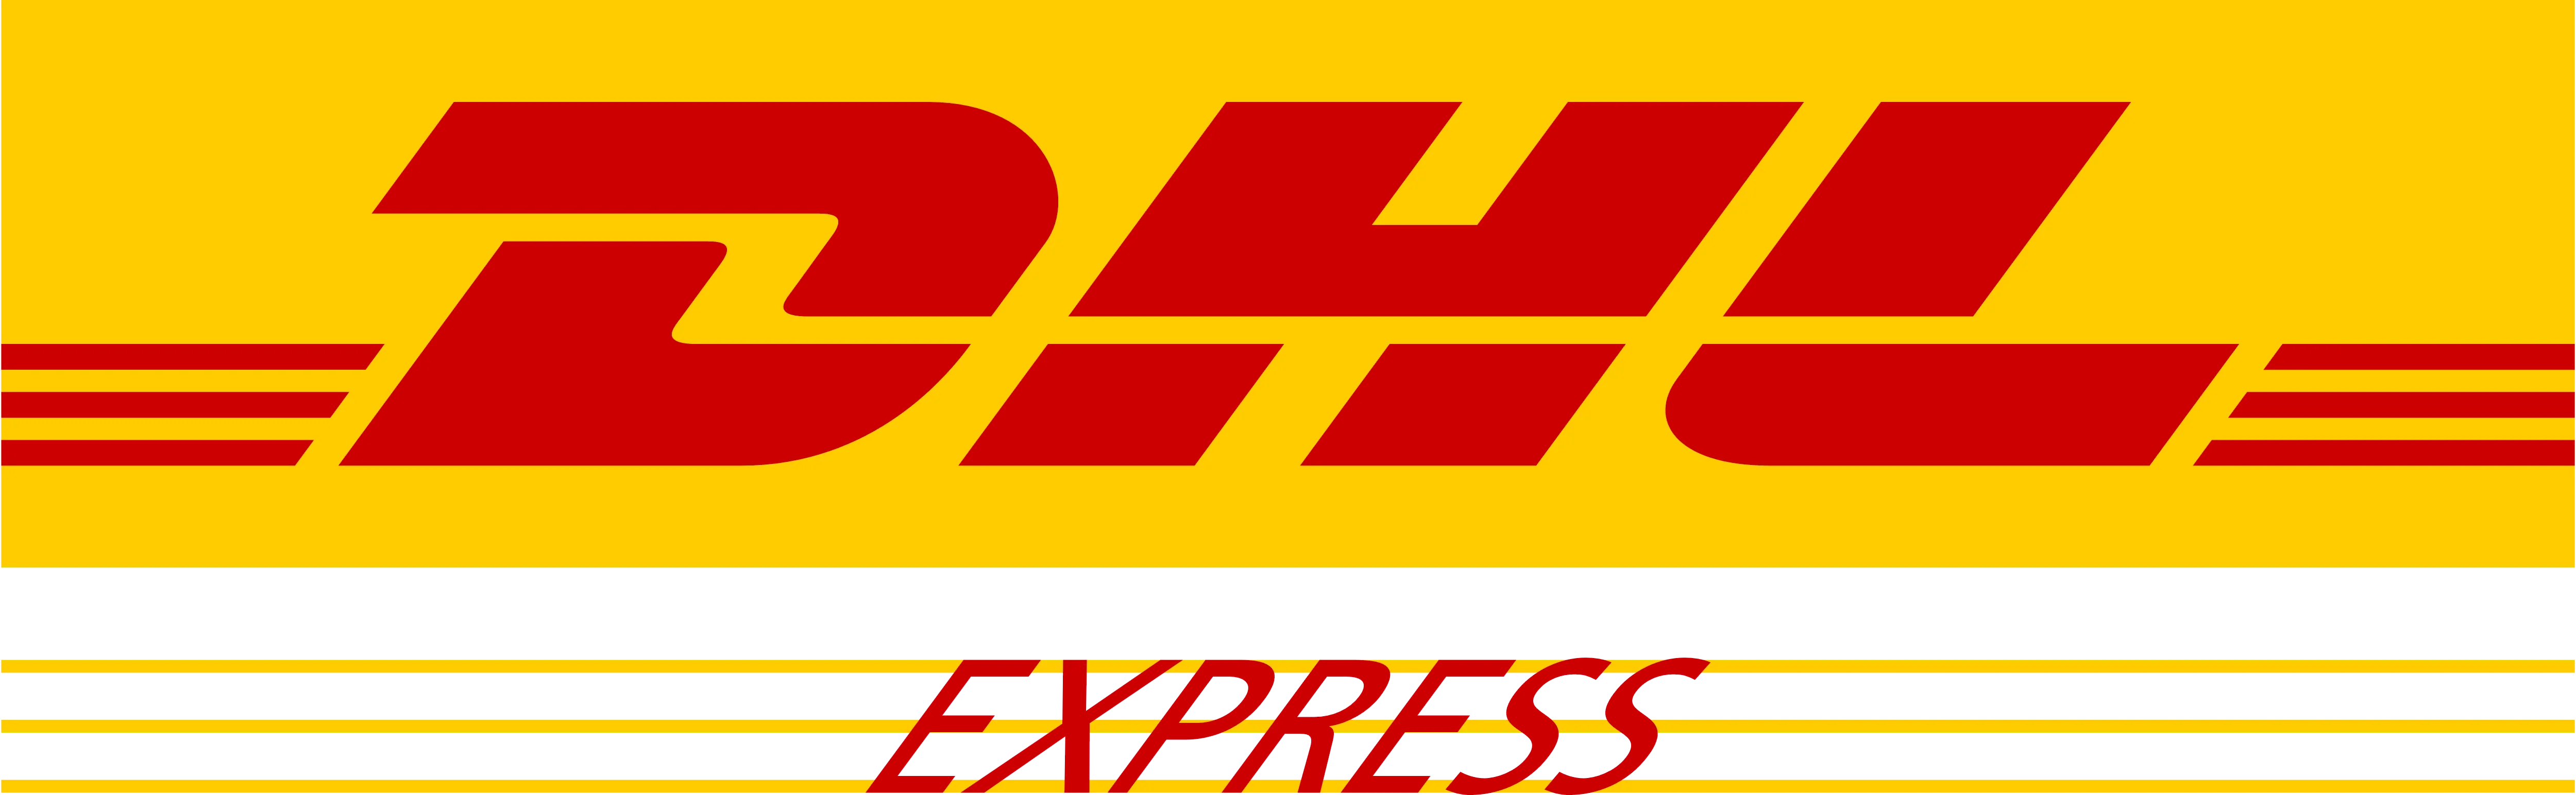 Логотип ДХЛ. DHL логотип компании. DHL Express. DHL logo svg.